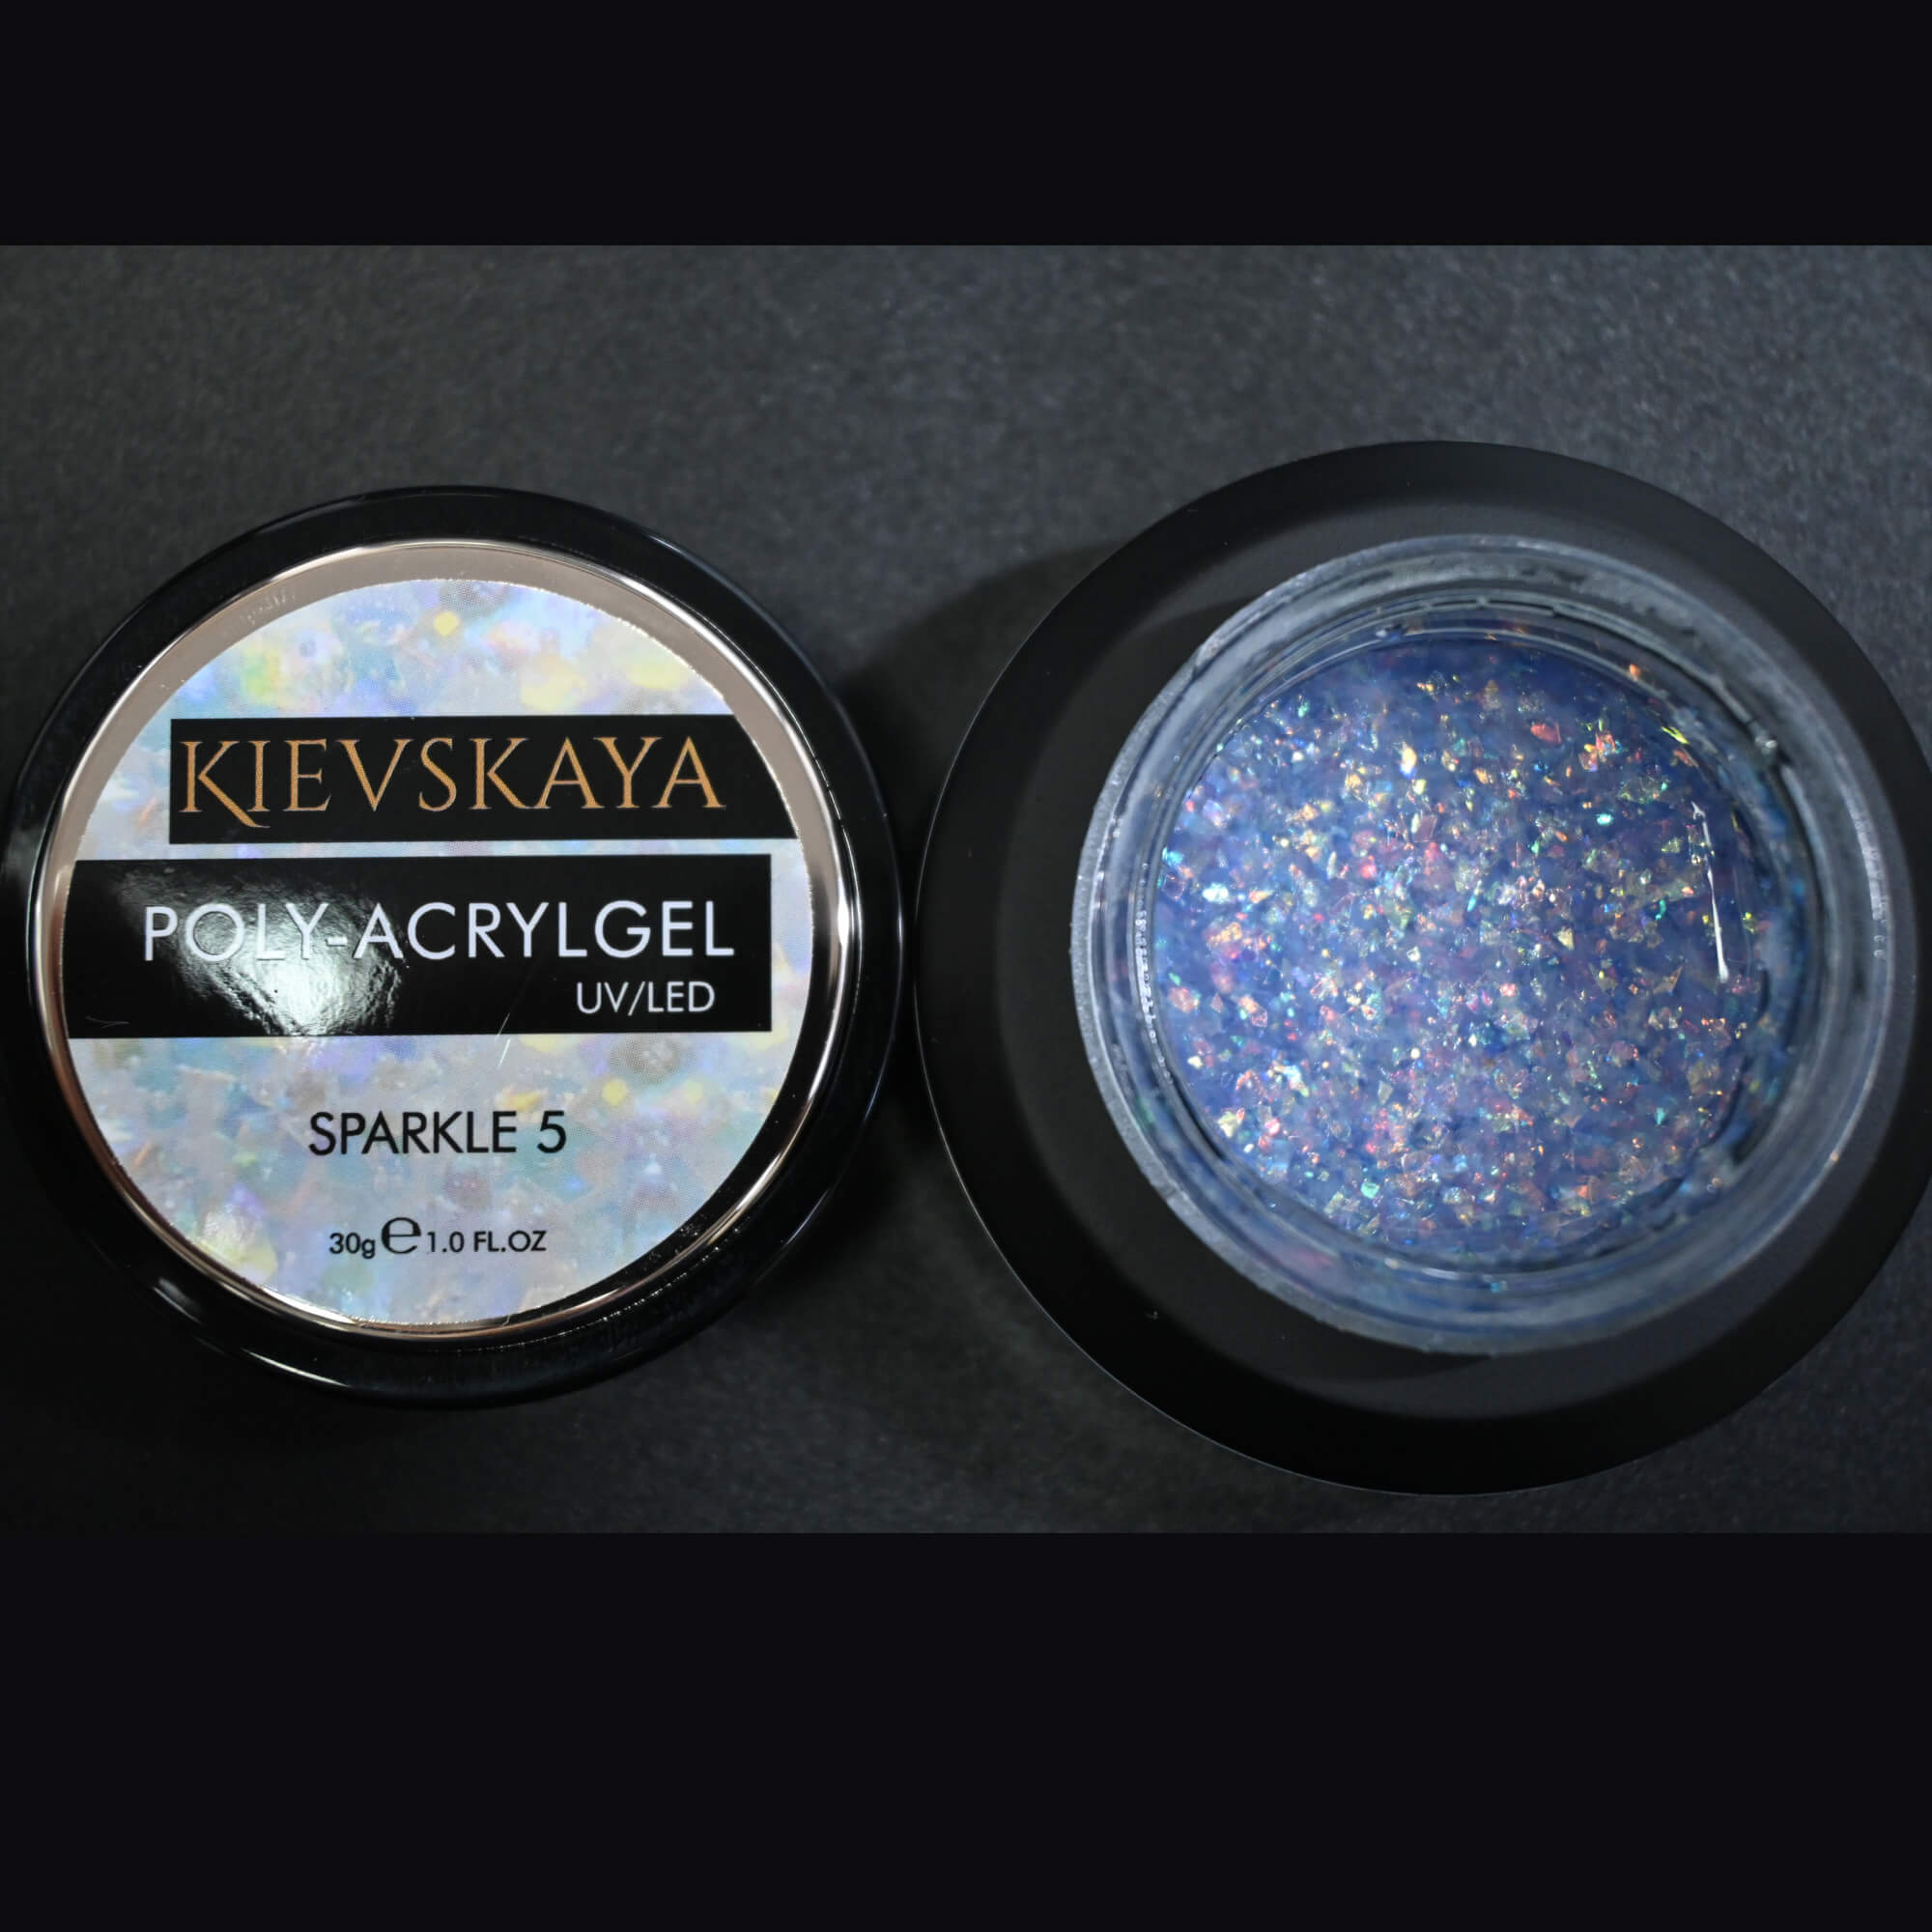 Poly-Acrylgel Sparkle Kievskaya 30gr-SPARKLE05 - SPARKLE05 - Everin.ro